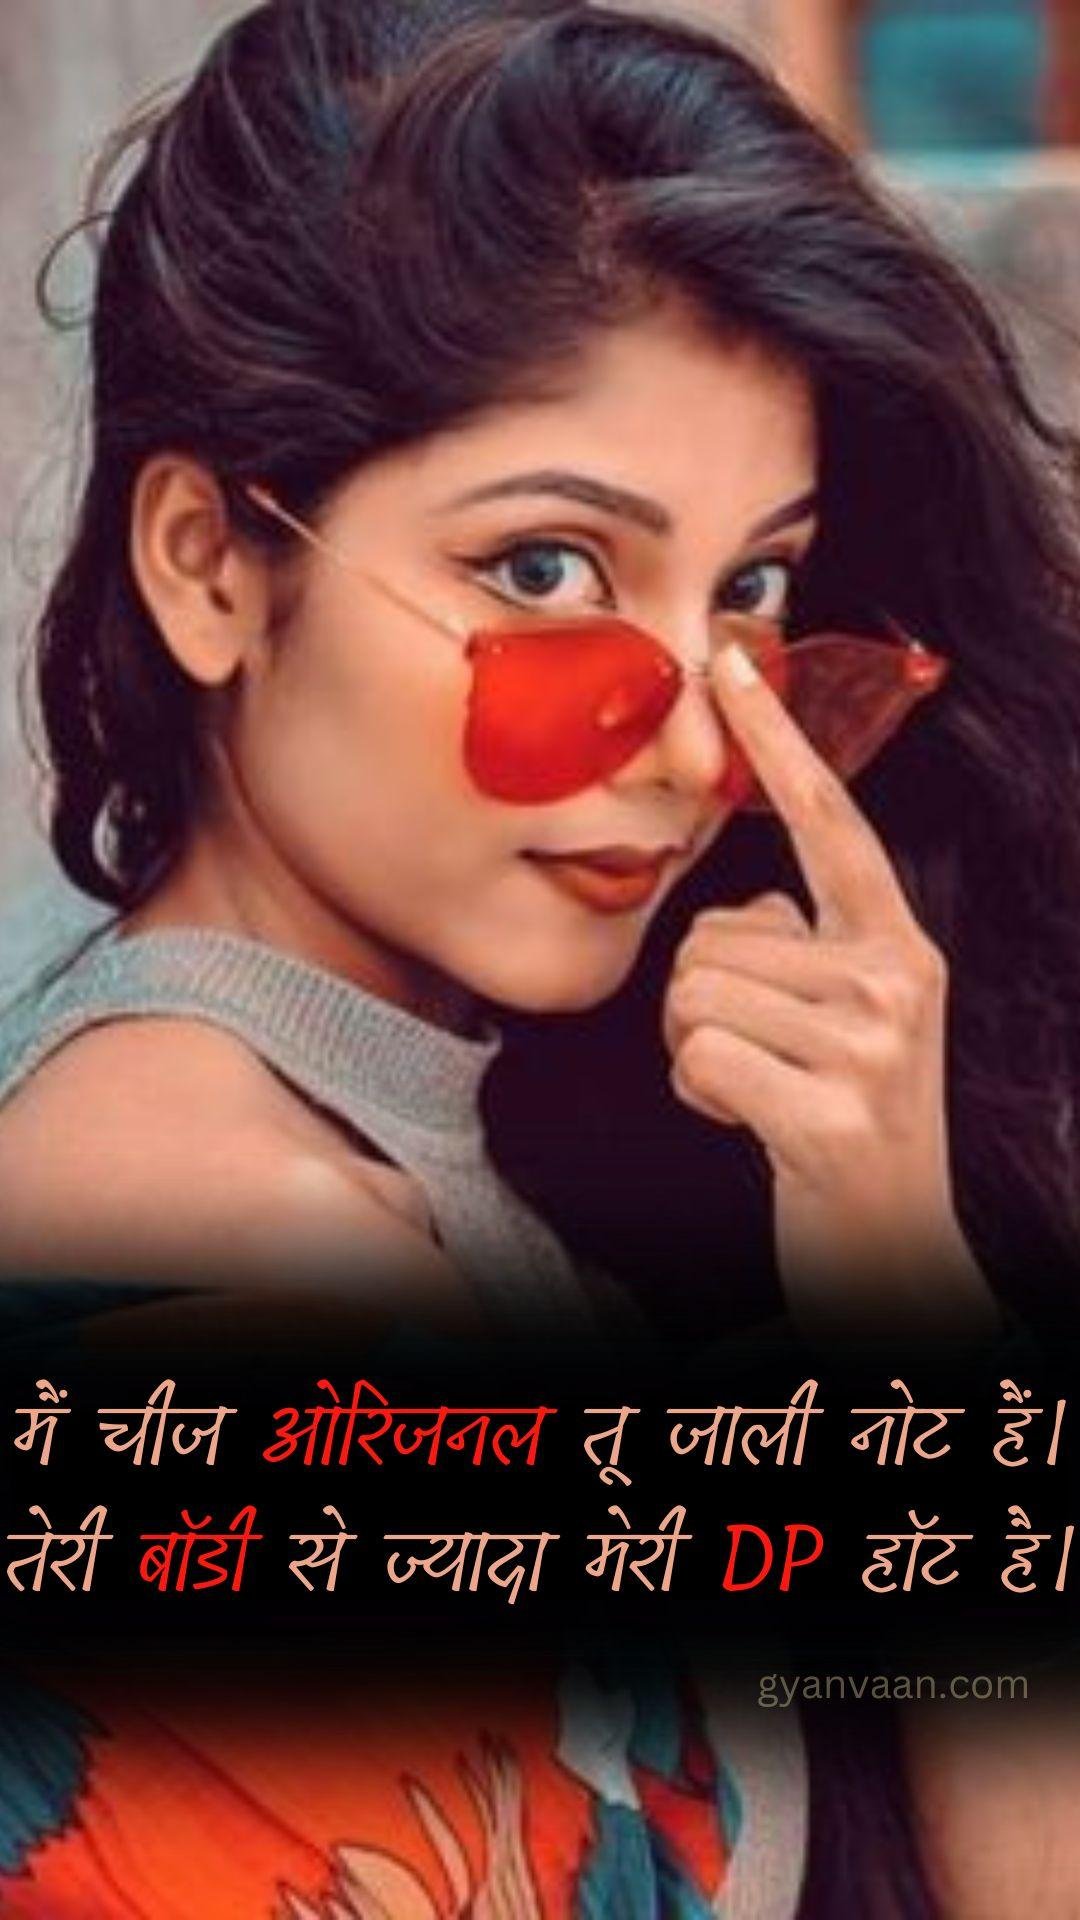 Attitude Status Attitude Quotes Attitude Shayari For Girl In Hindi Mobile 38 - Attitude Quotes For Girls